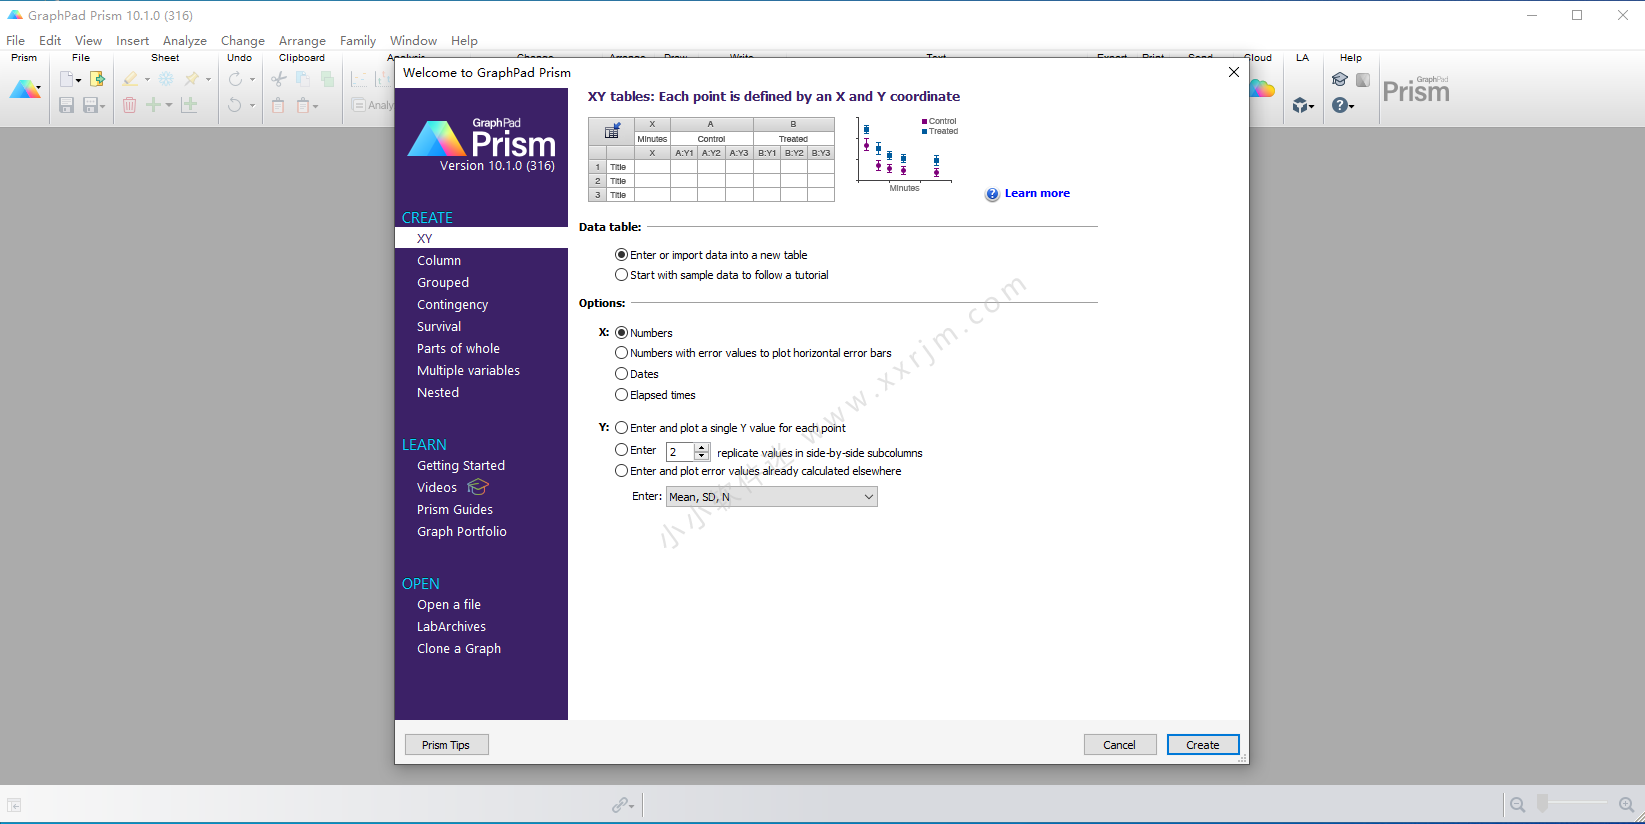 棱镜 GraphPad Prism 10.1.0.316 64位 英文破解版